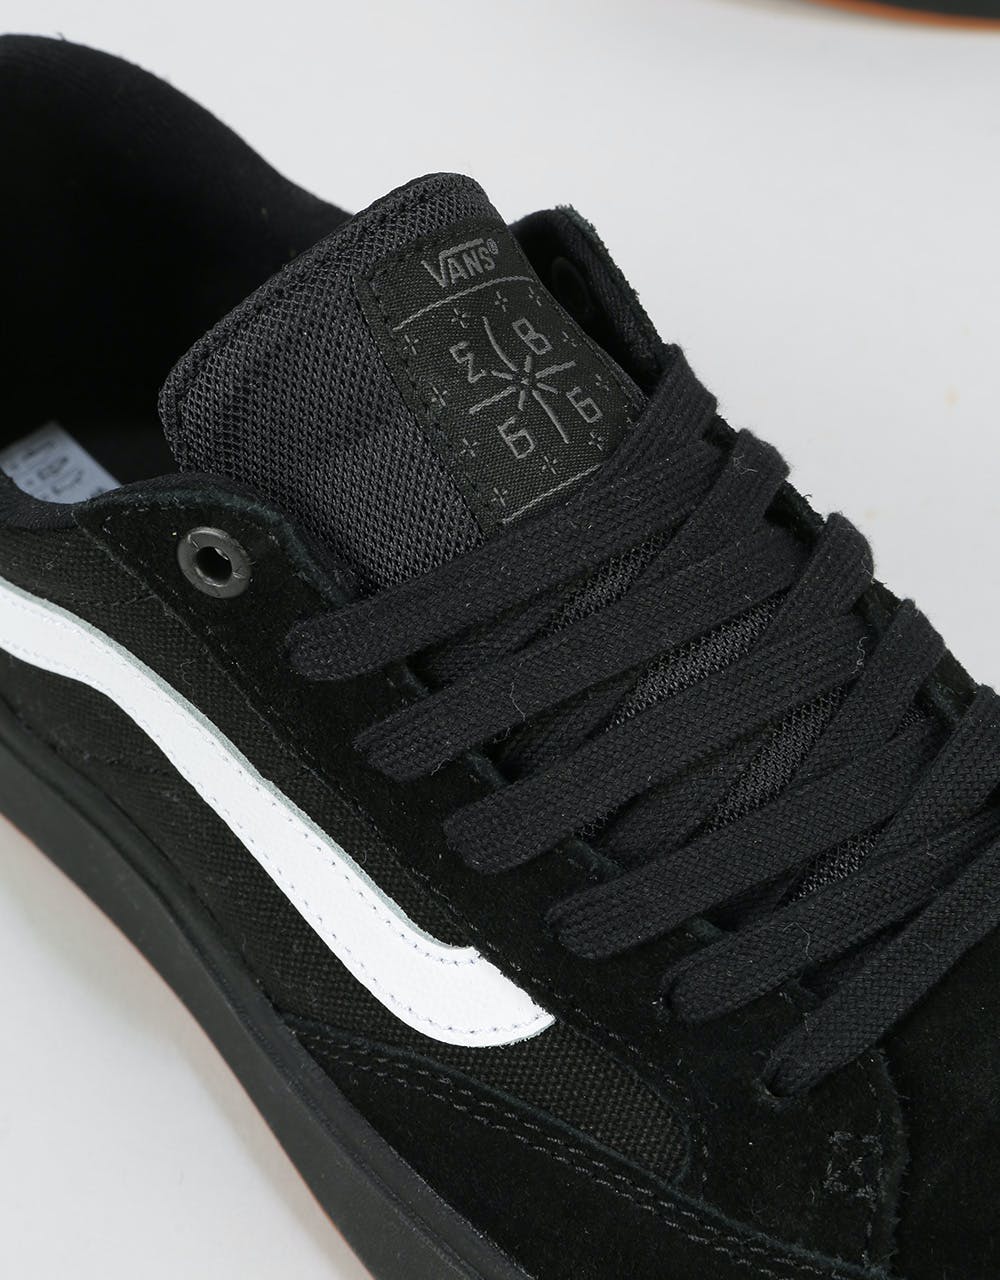 Vans Berle Pro Skate Shoes - Black/Black/White